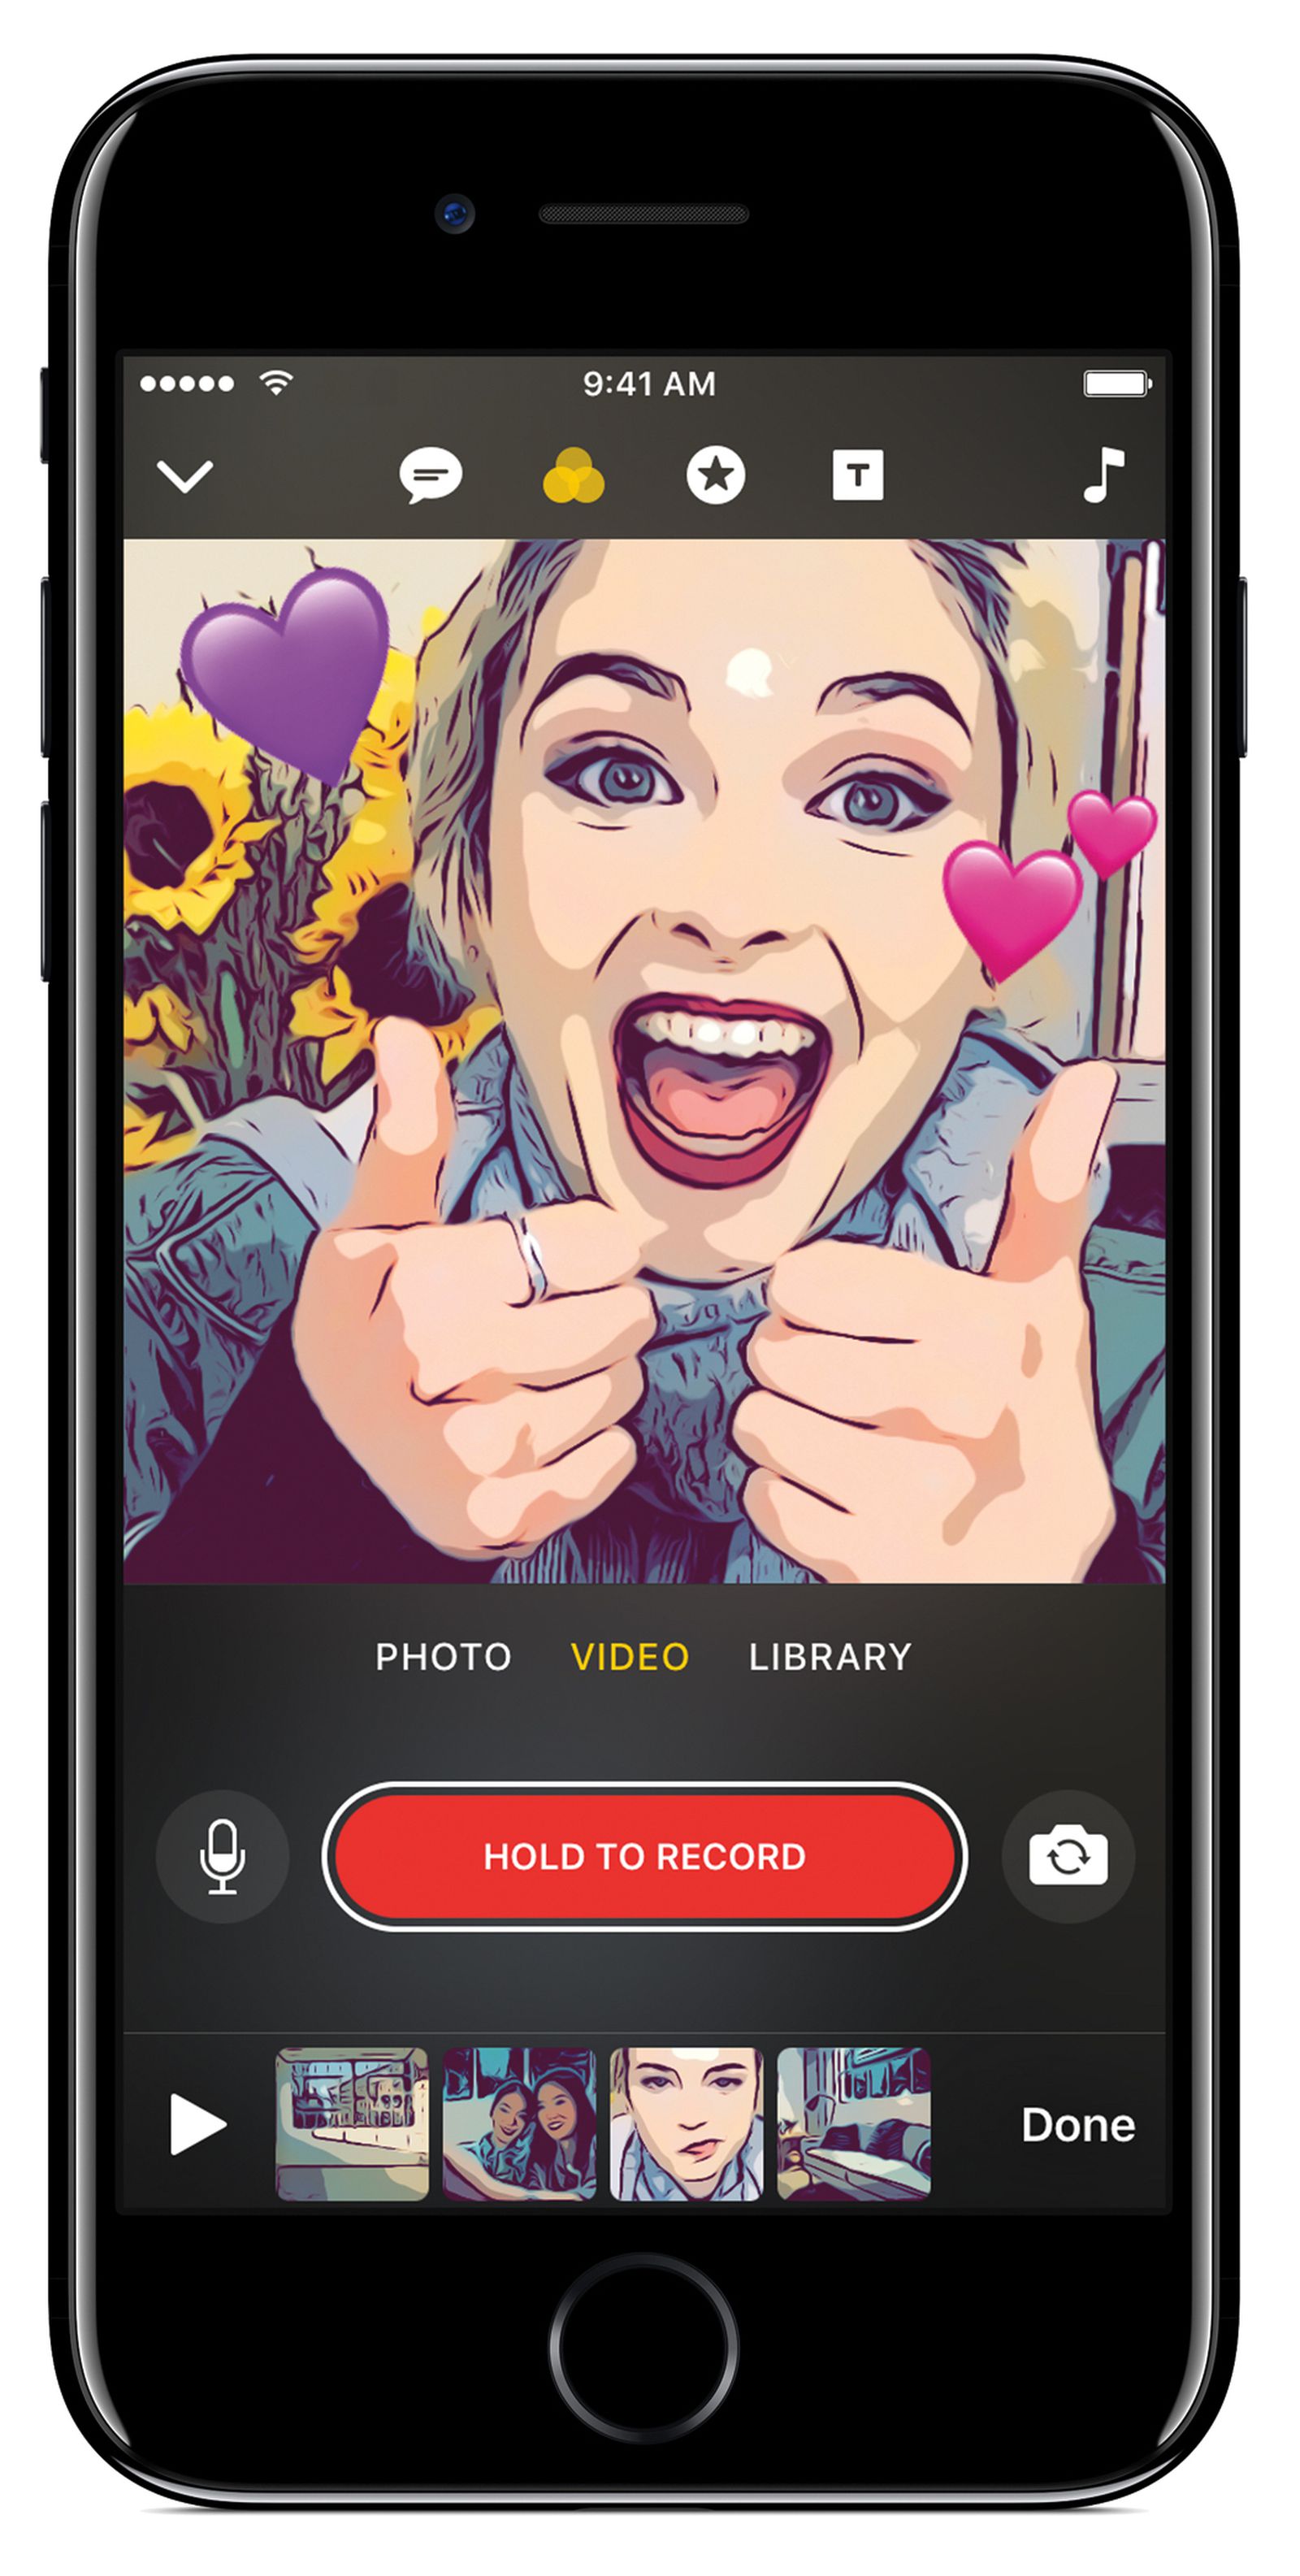 Apple Announces Video Creation iOS App 'Clips' - MacRumors